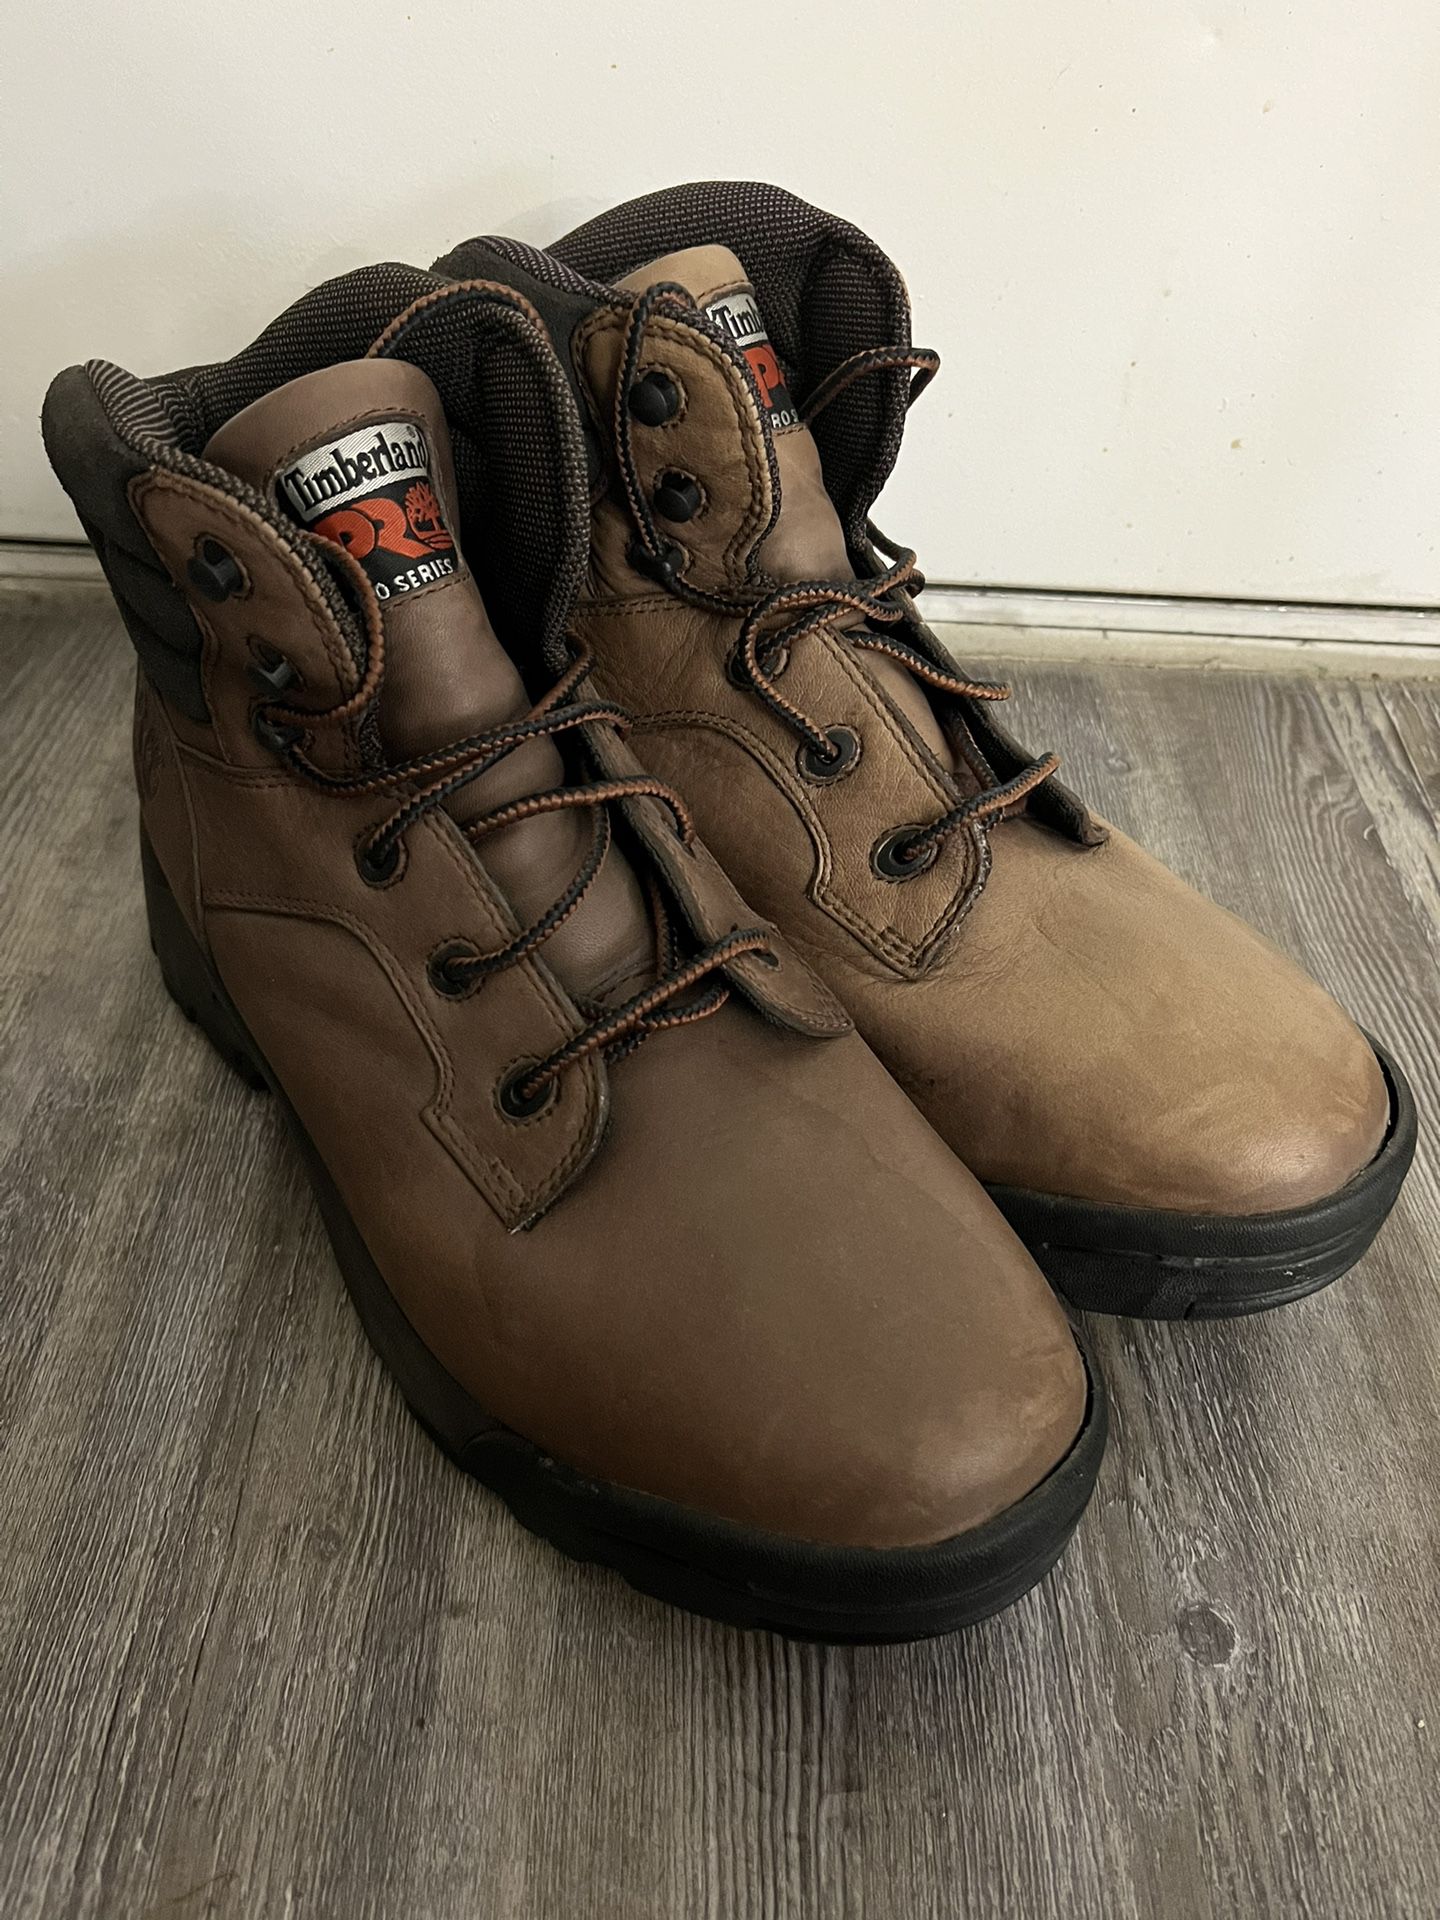 Timberland #66058 Pro Series Boots (size 10)